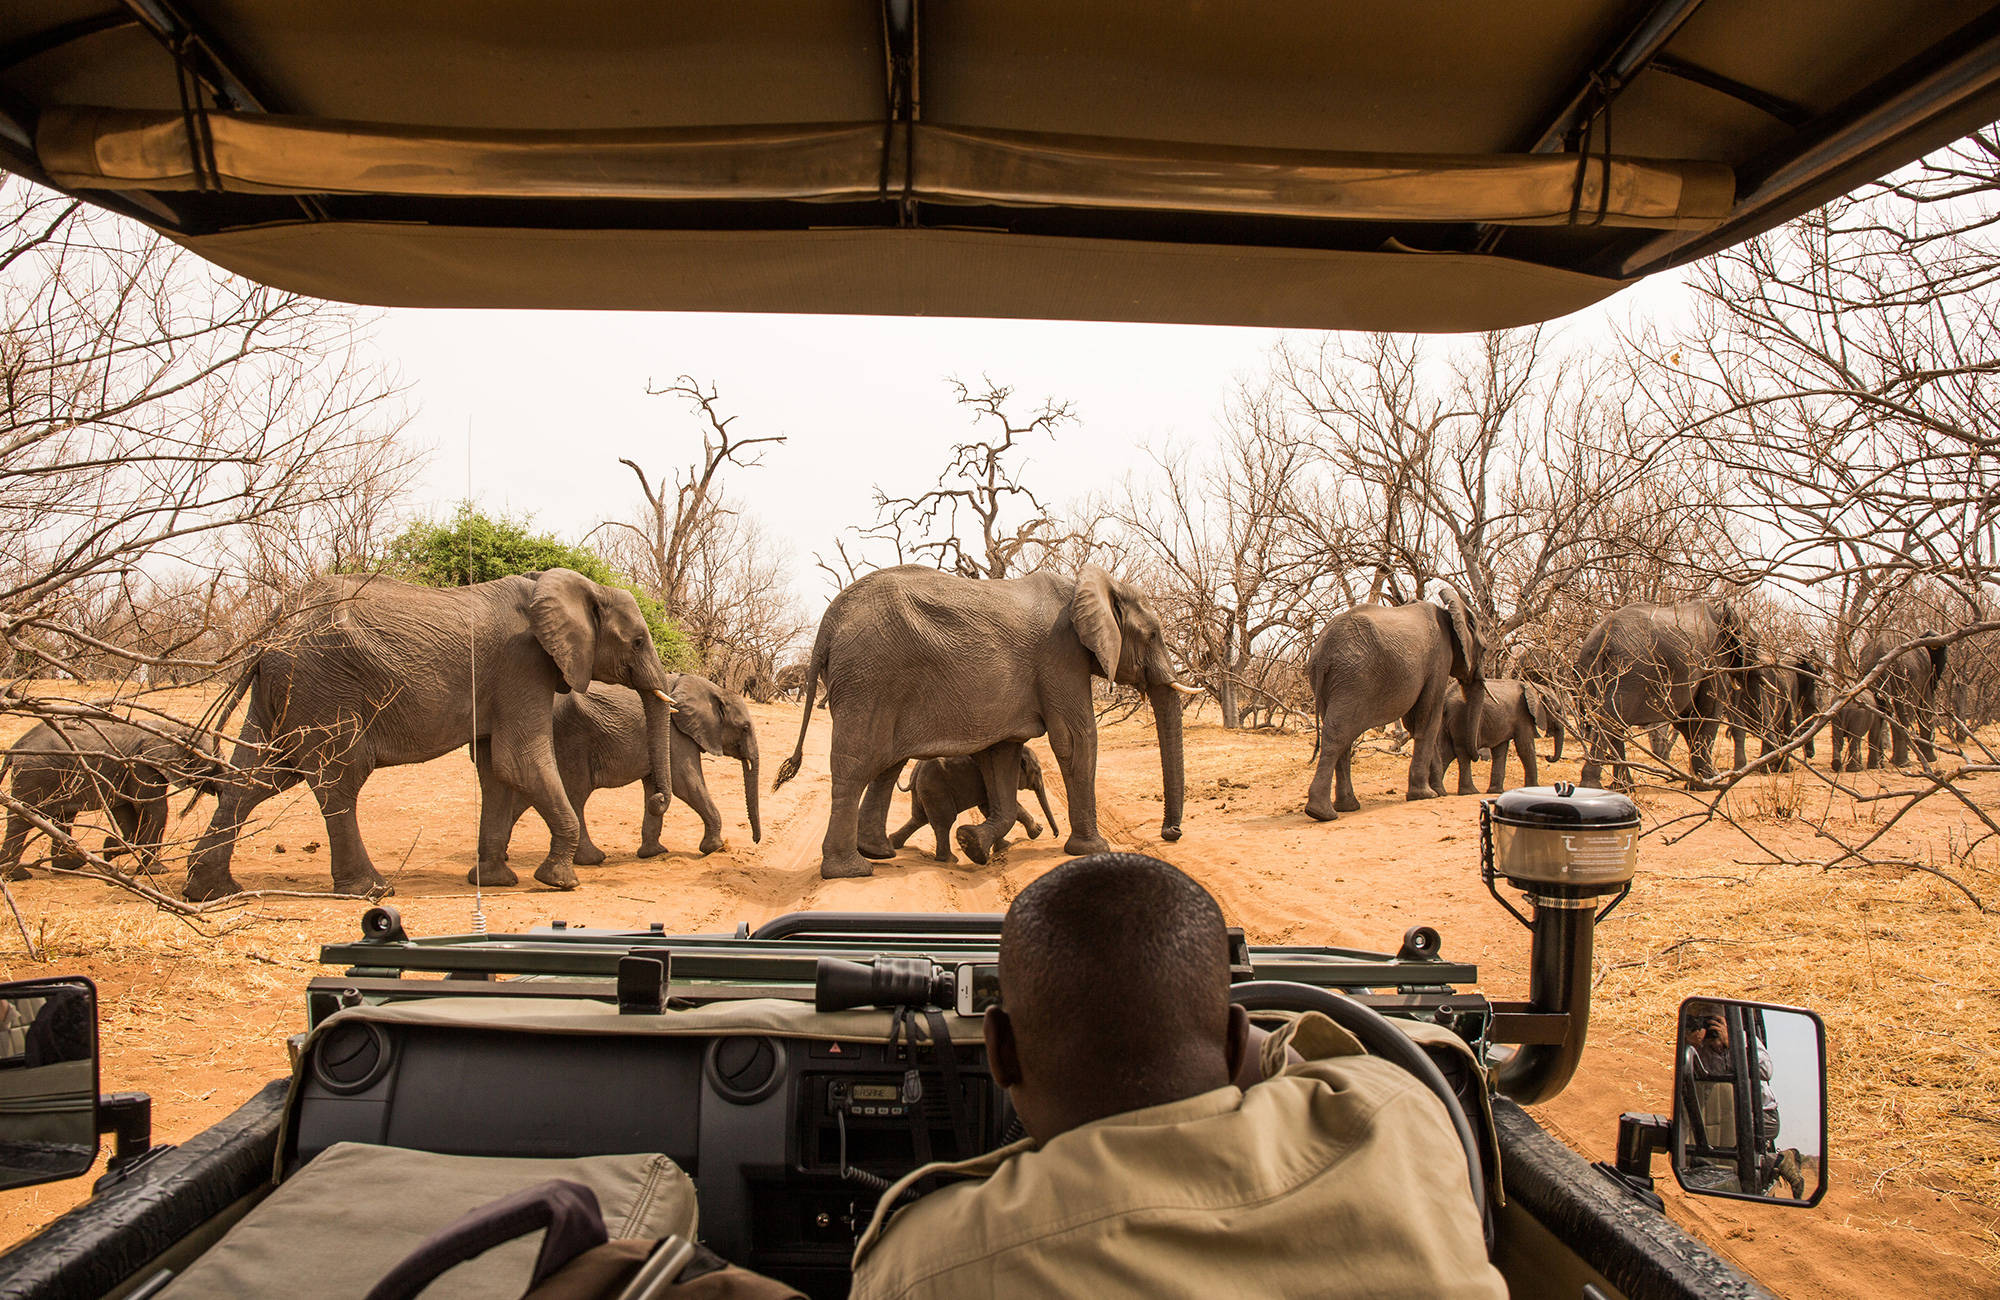 botswana-chobe-nationalpark-elephants-crossing-safari-road